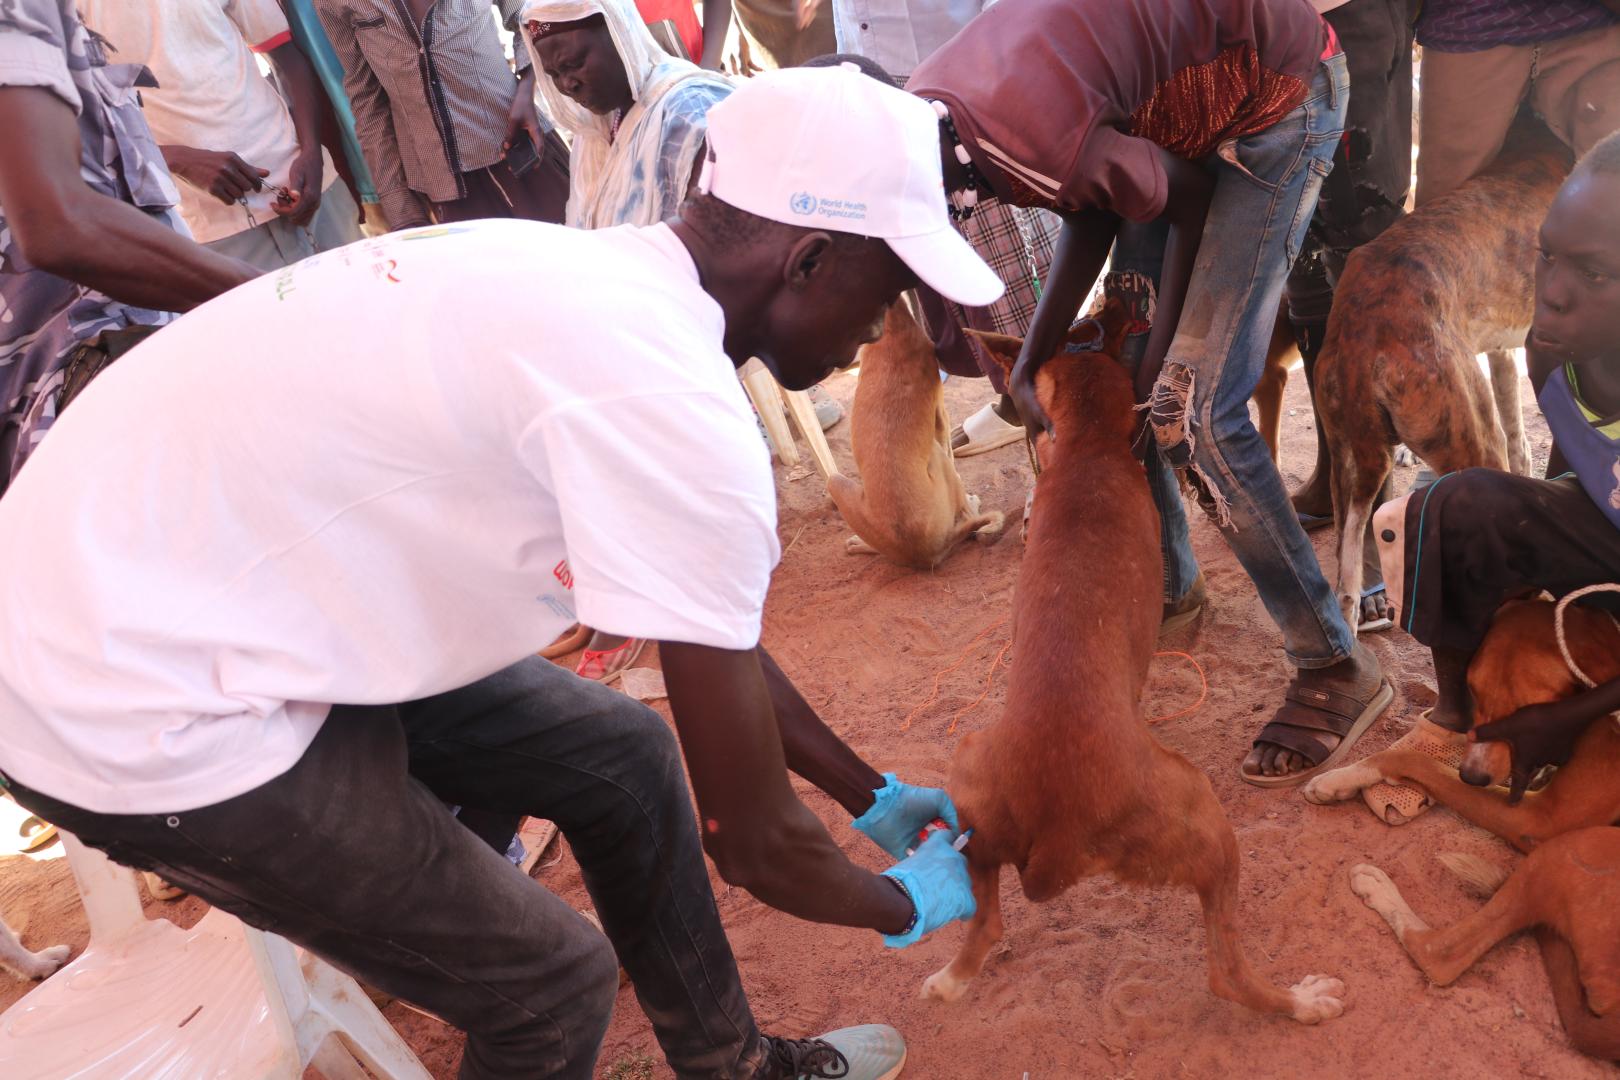 Rabies is a vaccine-preventable, zoonotic viral disease